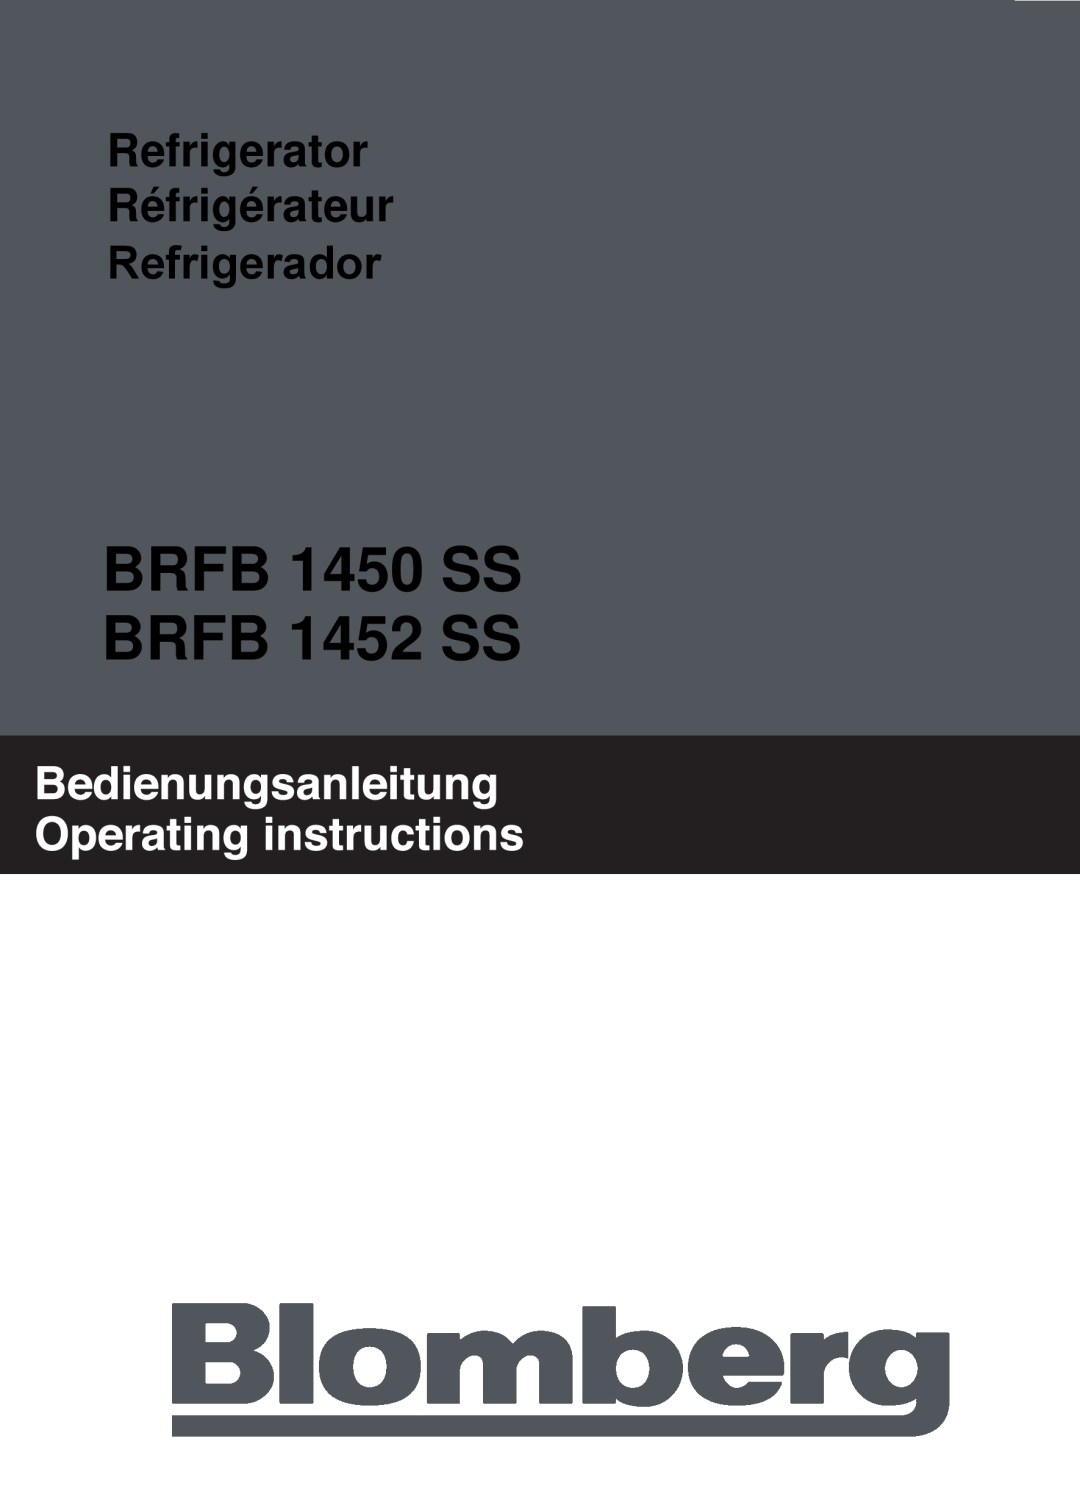 Blomberg manual BRFB 1450 SS BRFB 1452 SS, Refrigerator Réfrigérateur, Refrigerador 